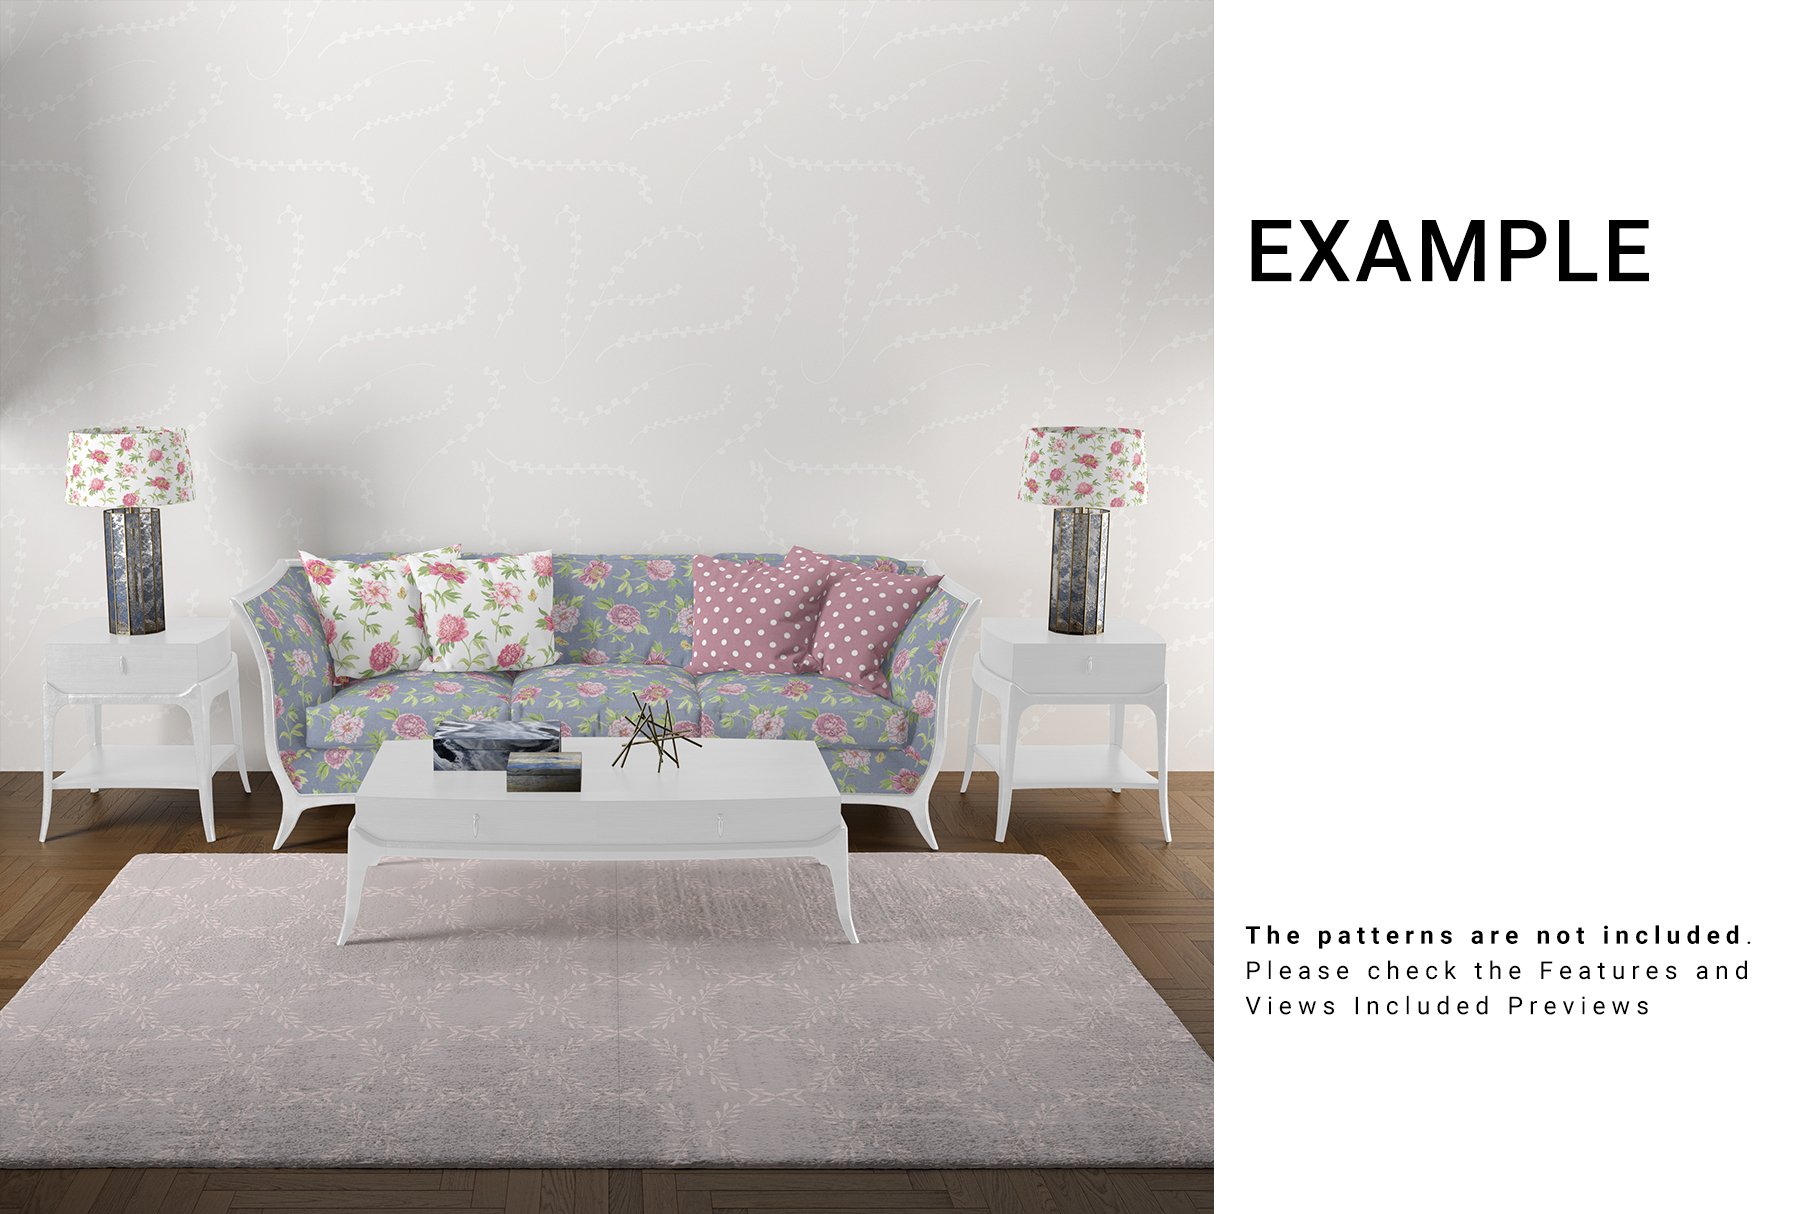 Living Room - Sofa Throw Pillows Wall & Carpet Set